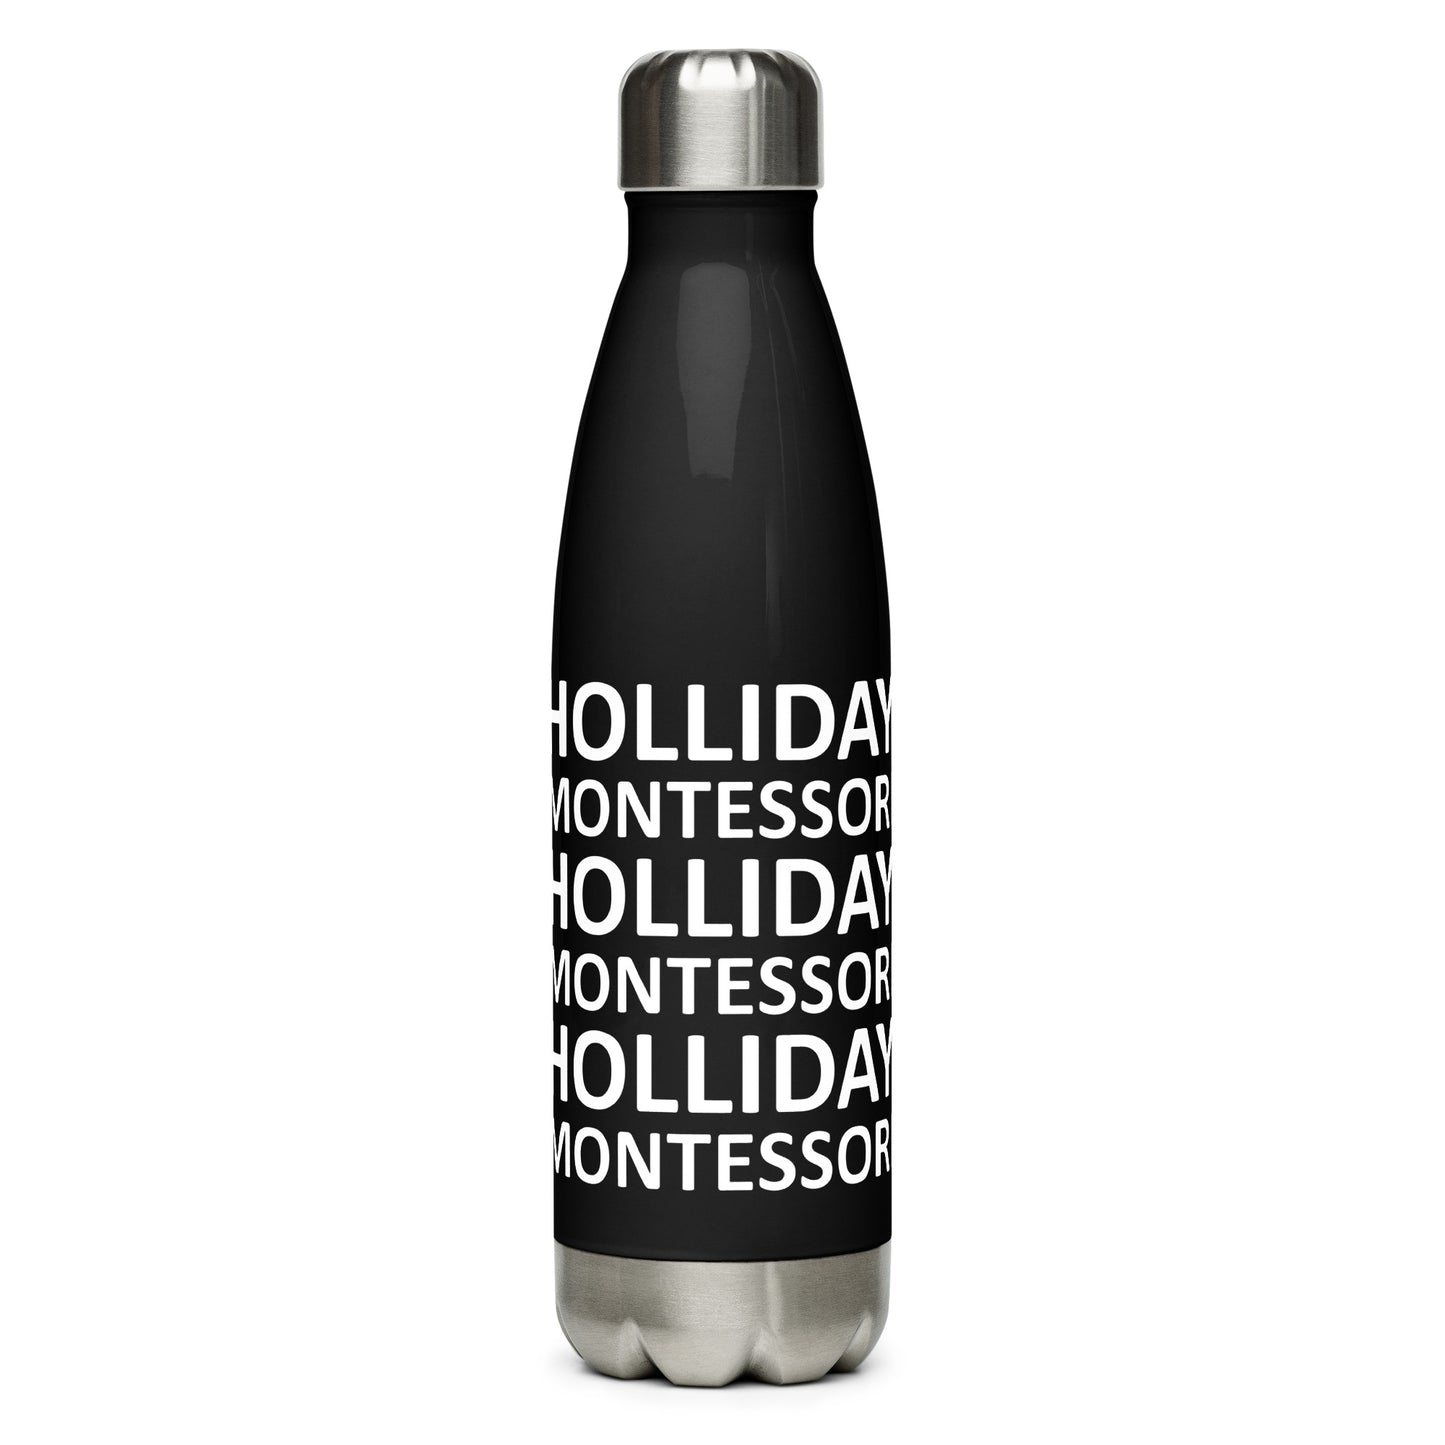 Holliday Montessori Stainless Steel Water Bottle